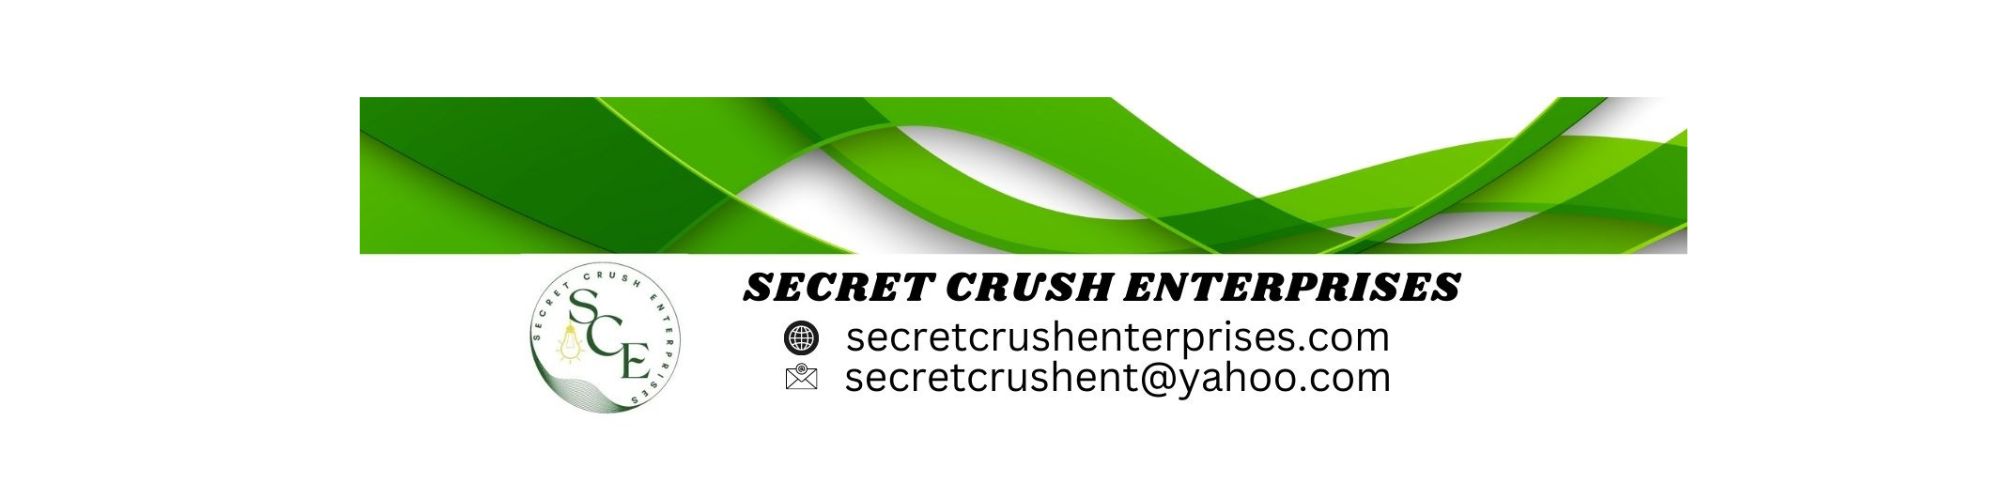 Secret Crush Enterprises